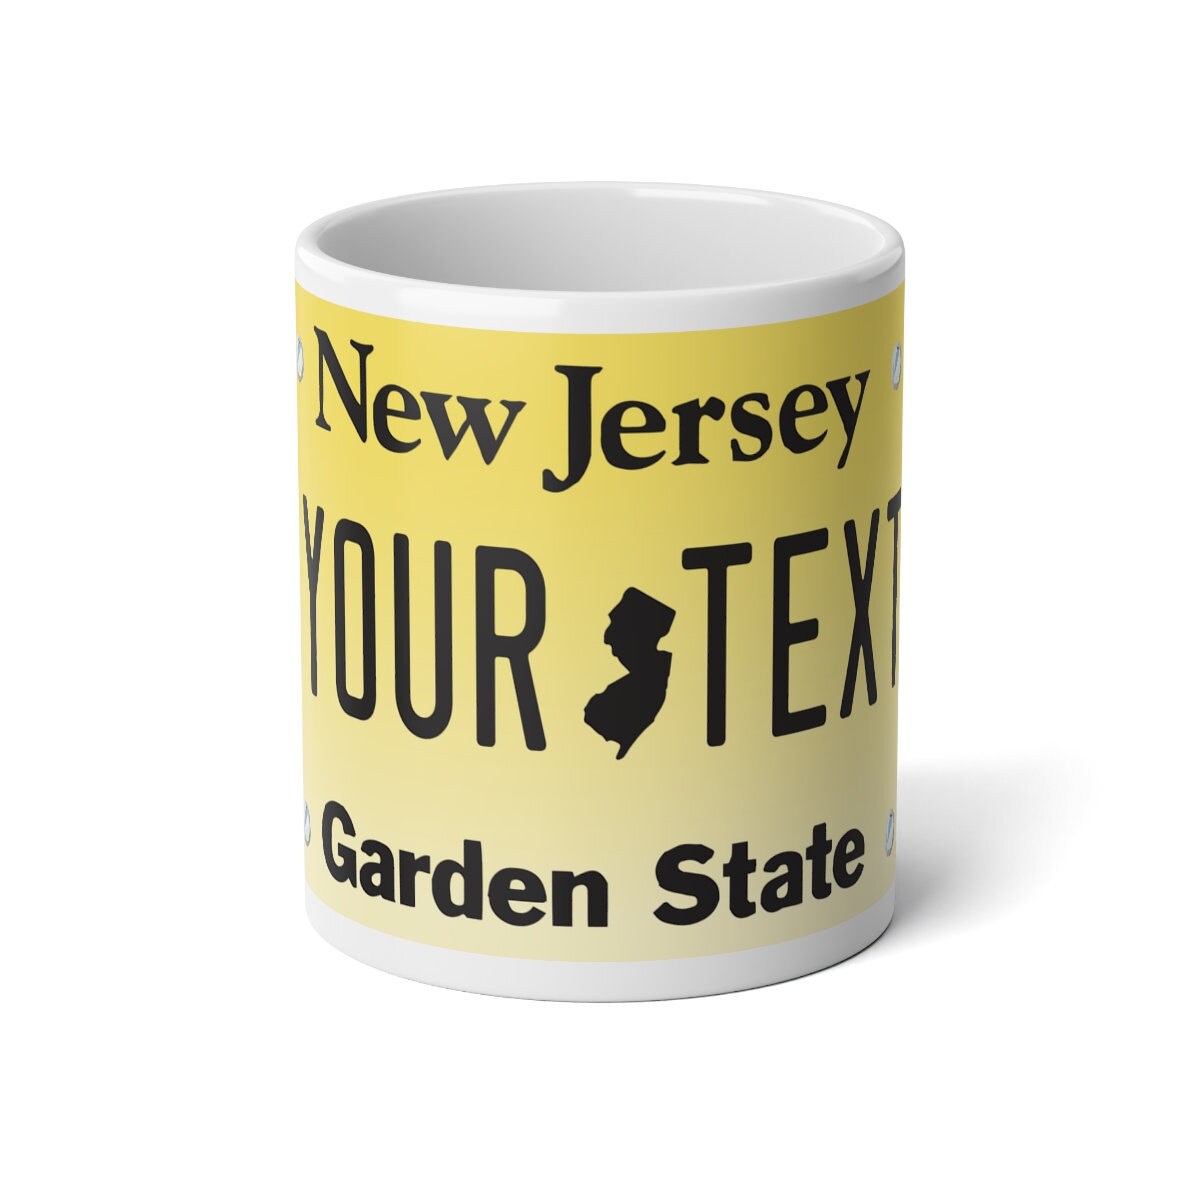 Blank New Jersey State License Plate Coffee Mug by Bigalbaloo Stock - Fine  Art America